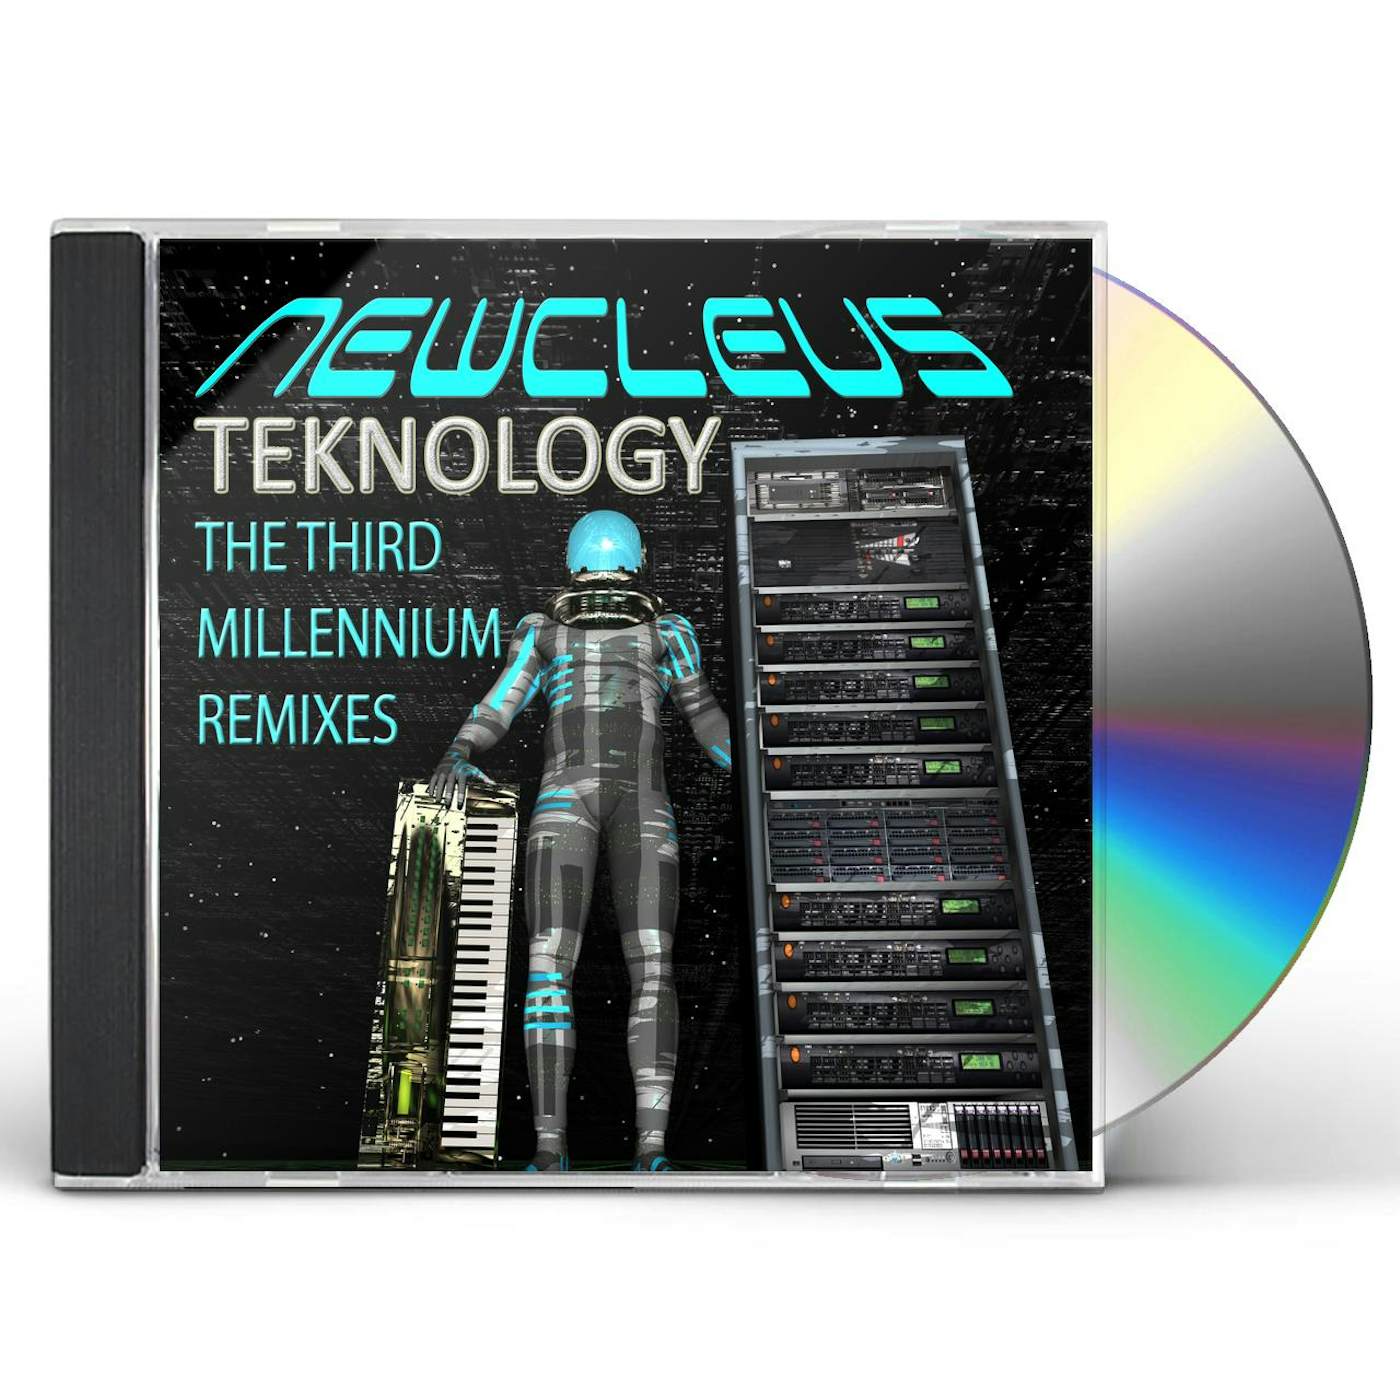 Newcleus TEKNOLOGY: THE THIRD MILLENNIUM REMIXES CD